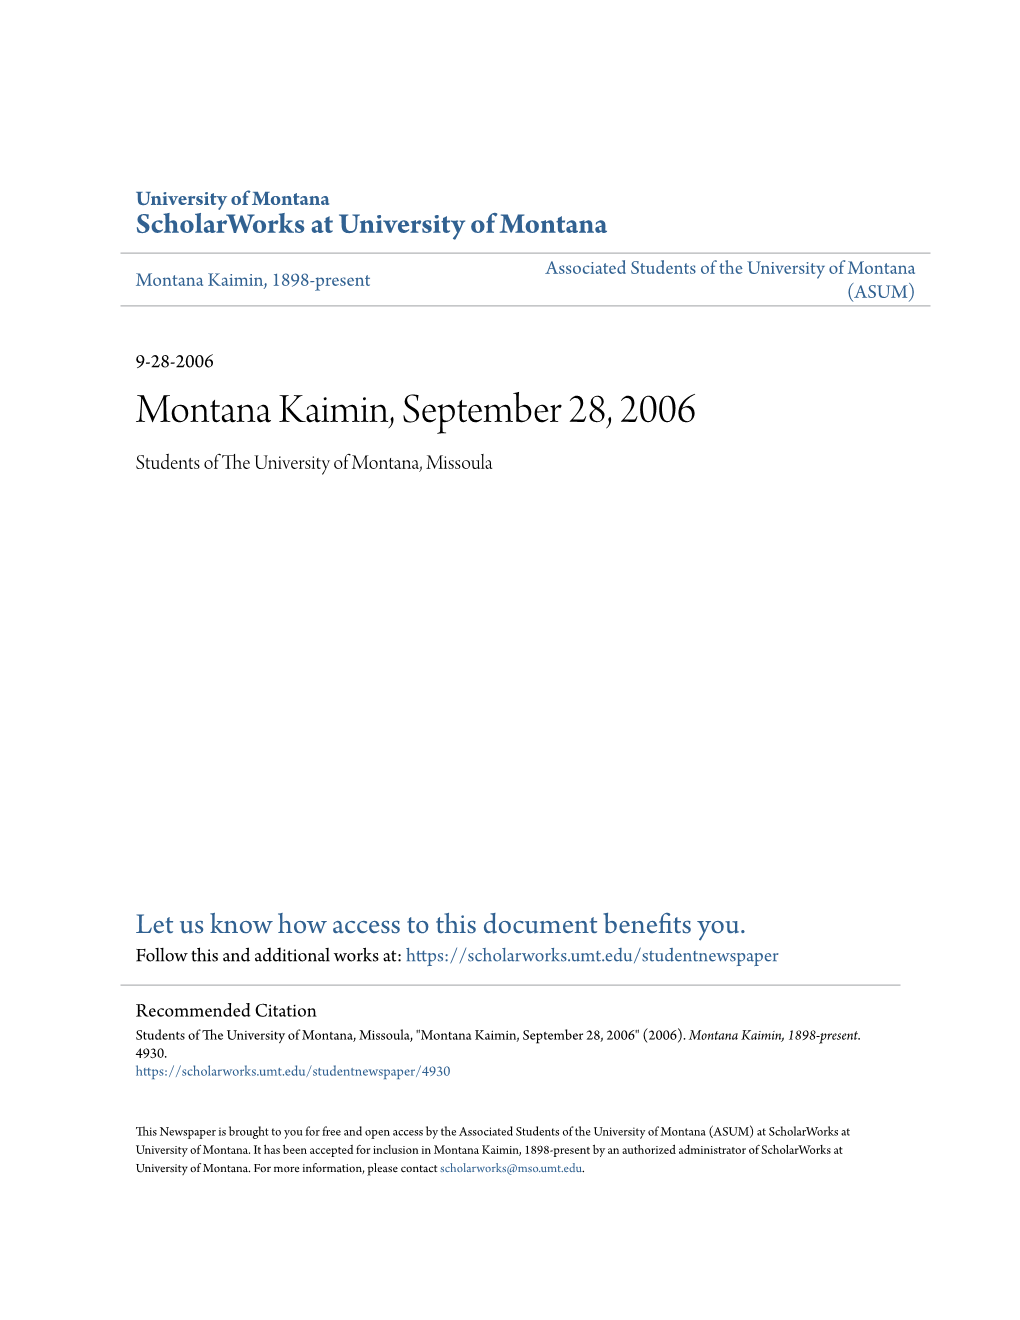 Montana Kaimin, September 28, 2006 Students of the Niu Versity of Montana, Missoula